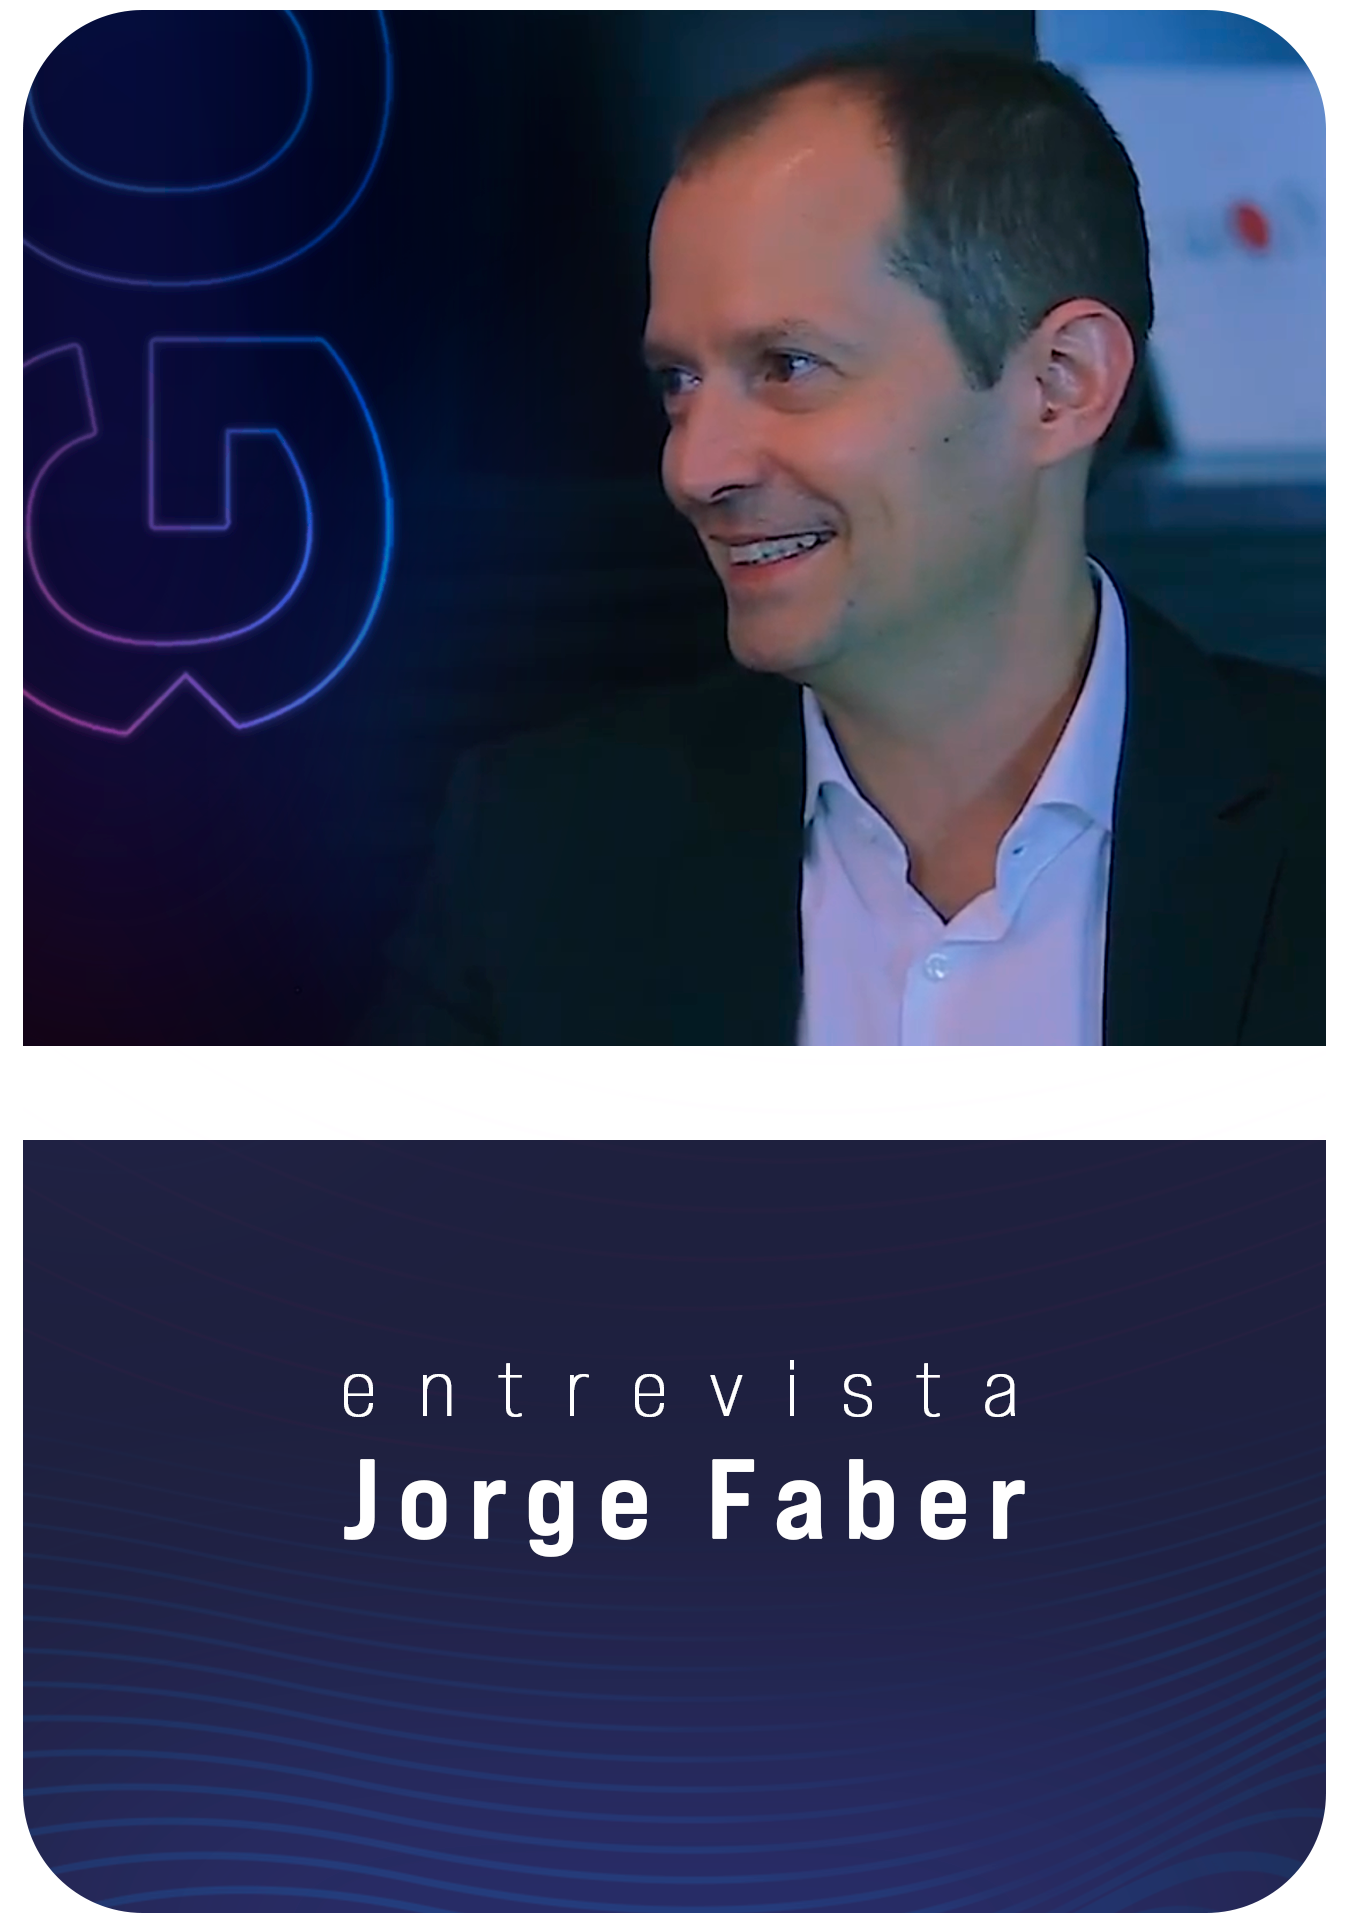 Dr. Jorge Faber